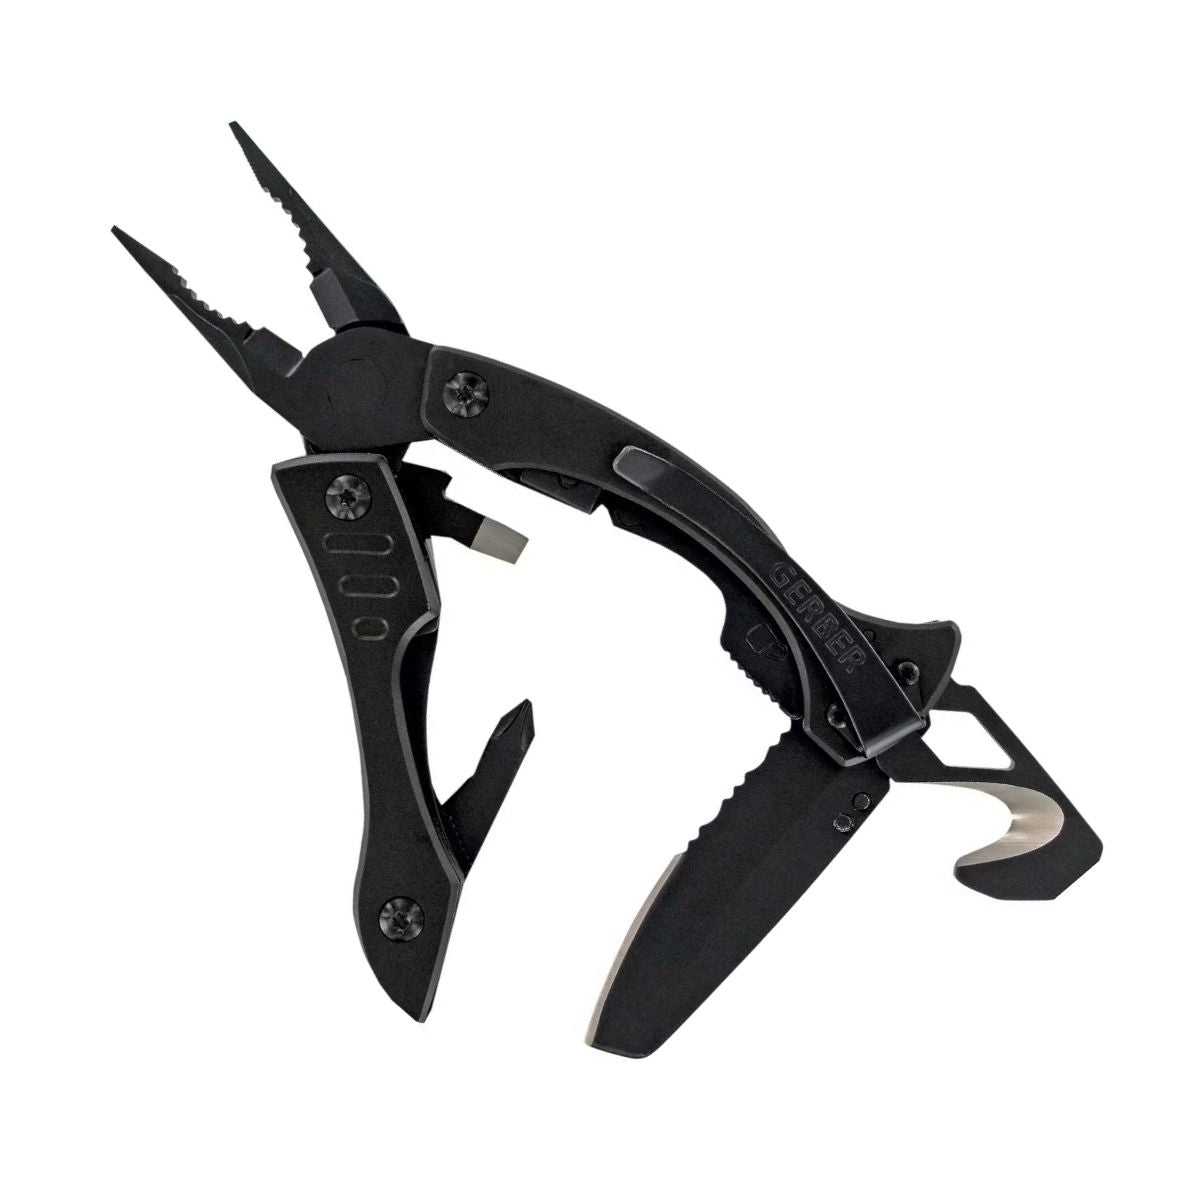 Gerber Gear Crucial Pocket Multi-Tool - Black